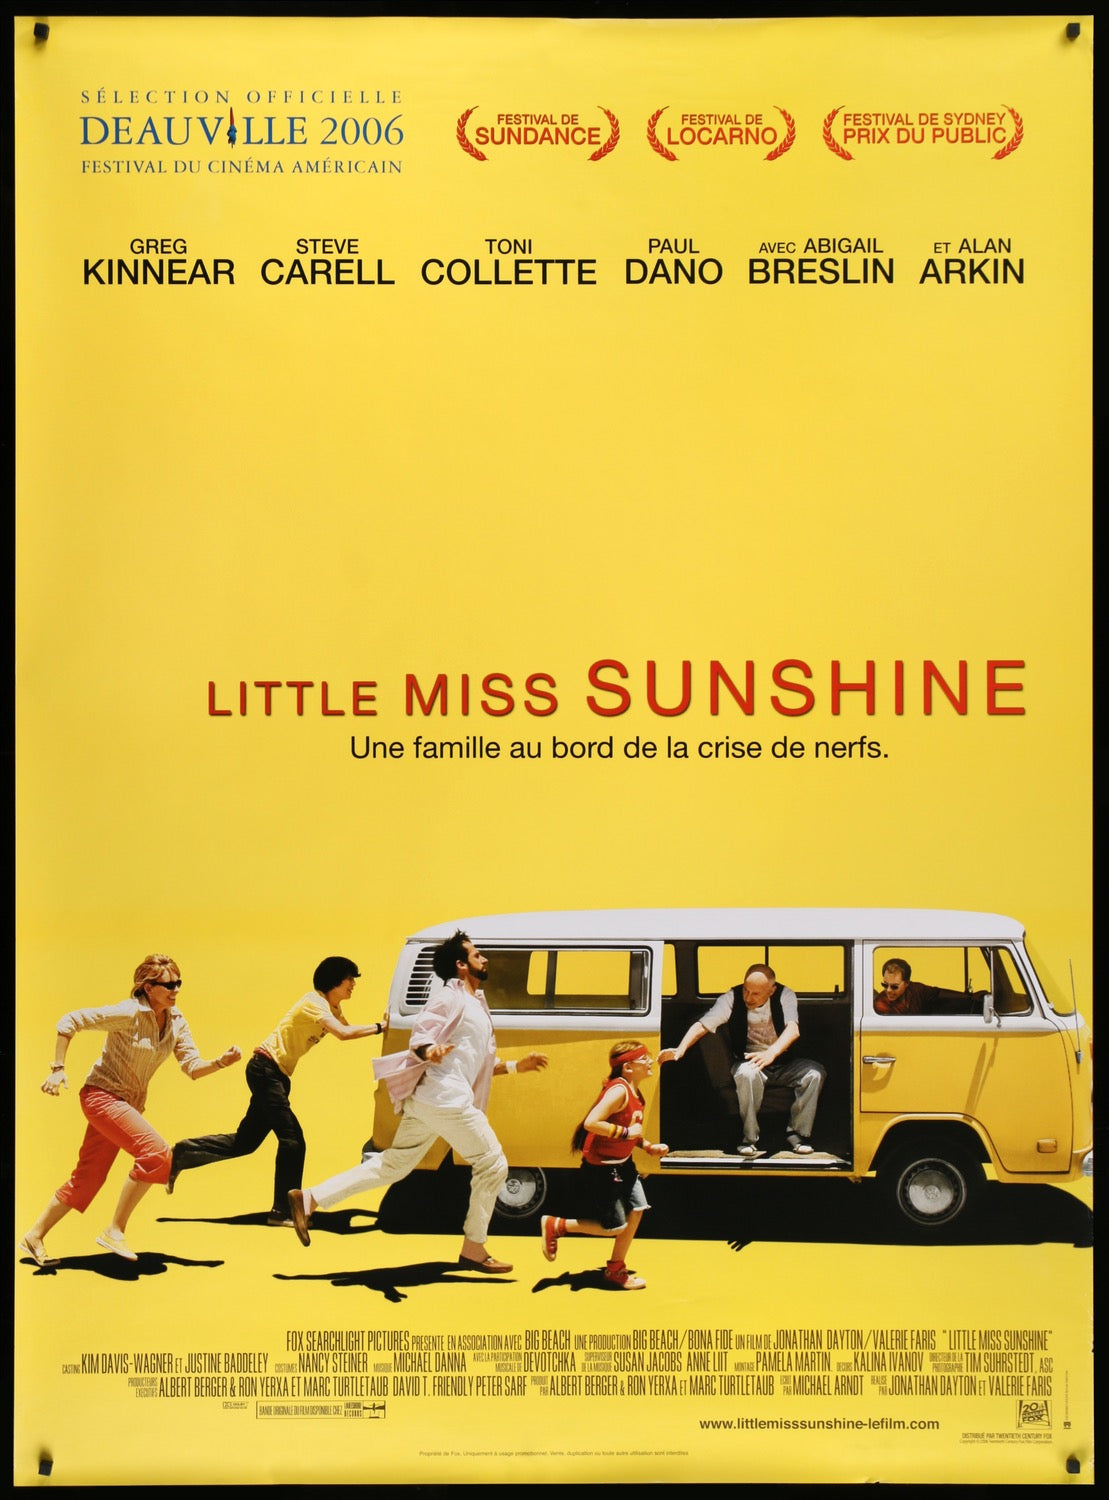 Little Miss Sunshine (2006) original movie poster for sale at Original Film Art